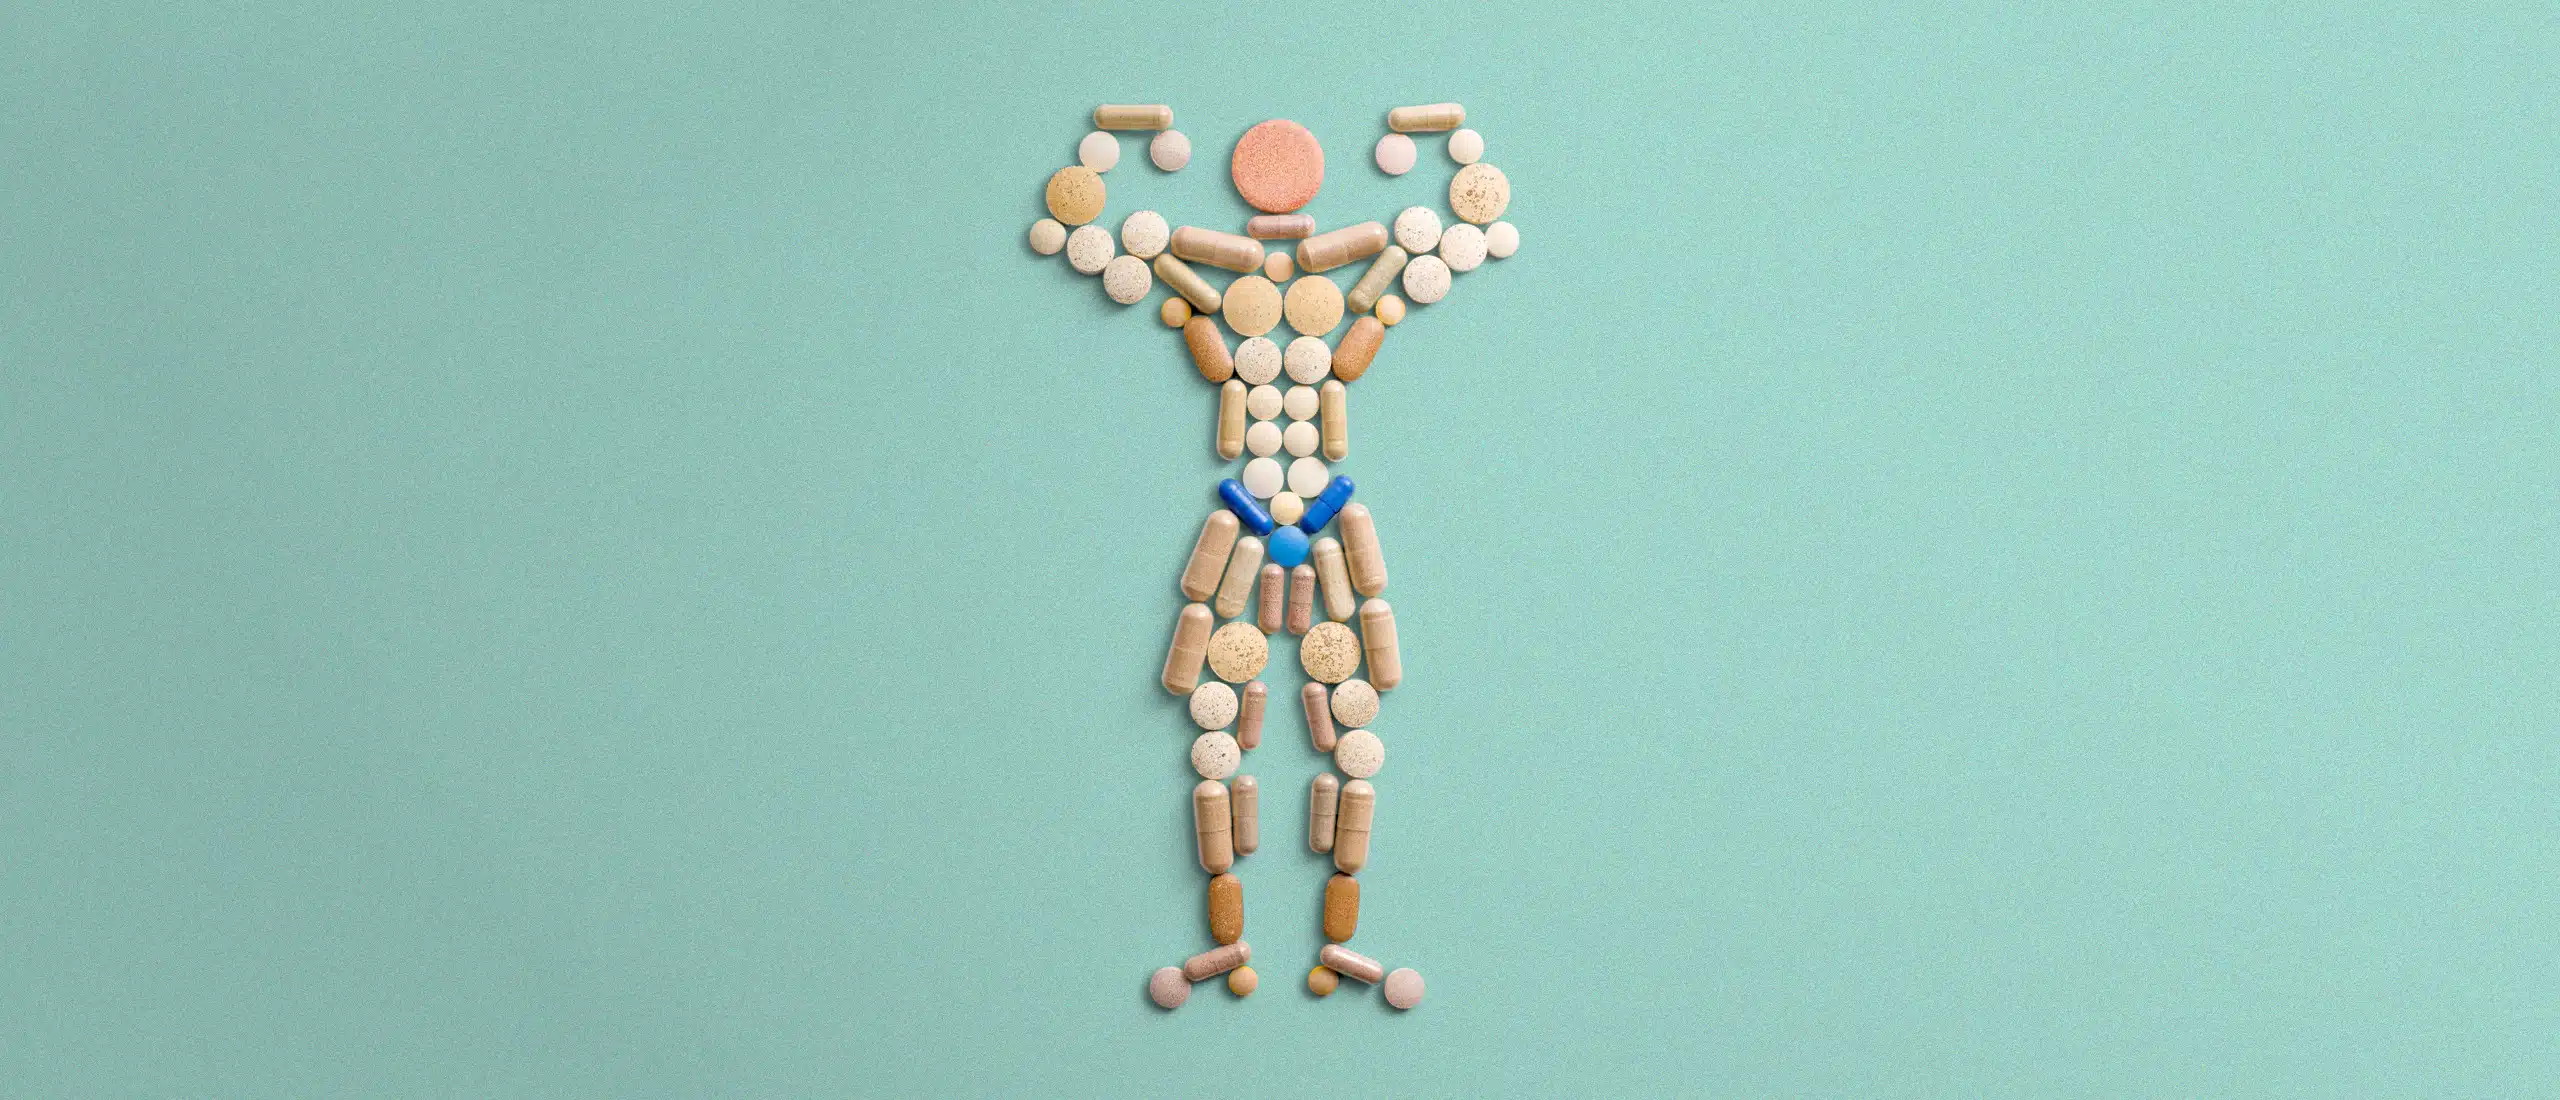 Pills arranged into the shape of a man flexing